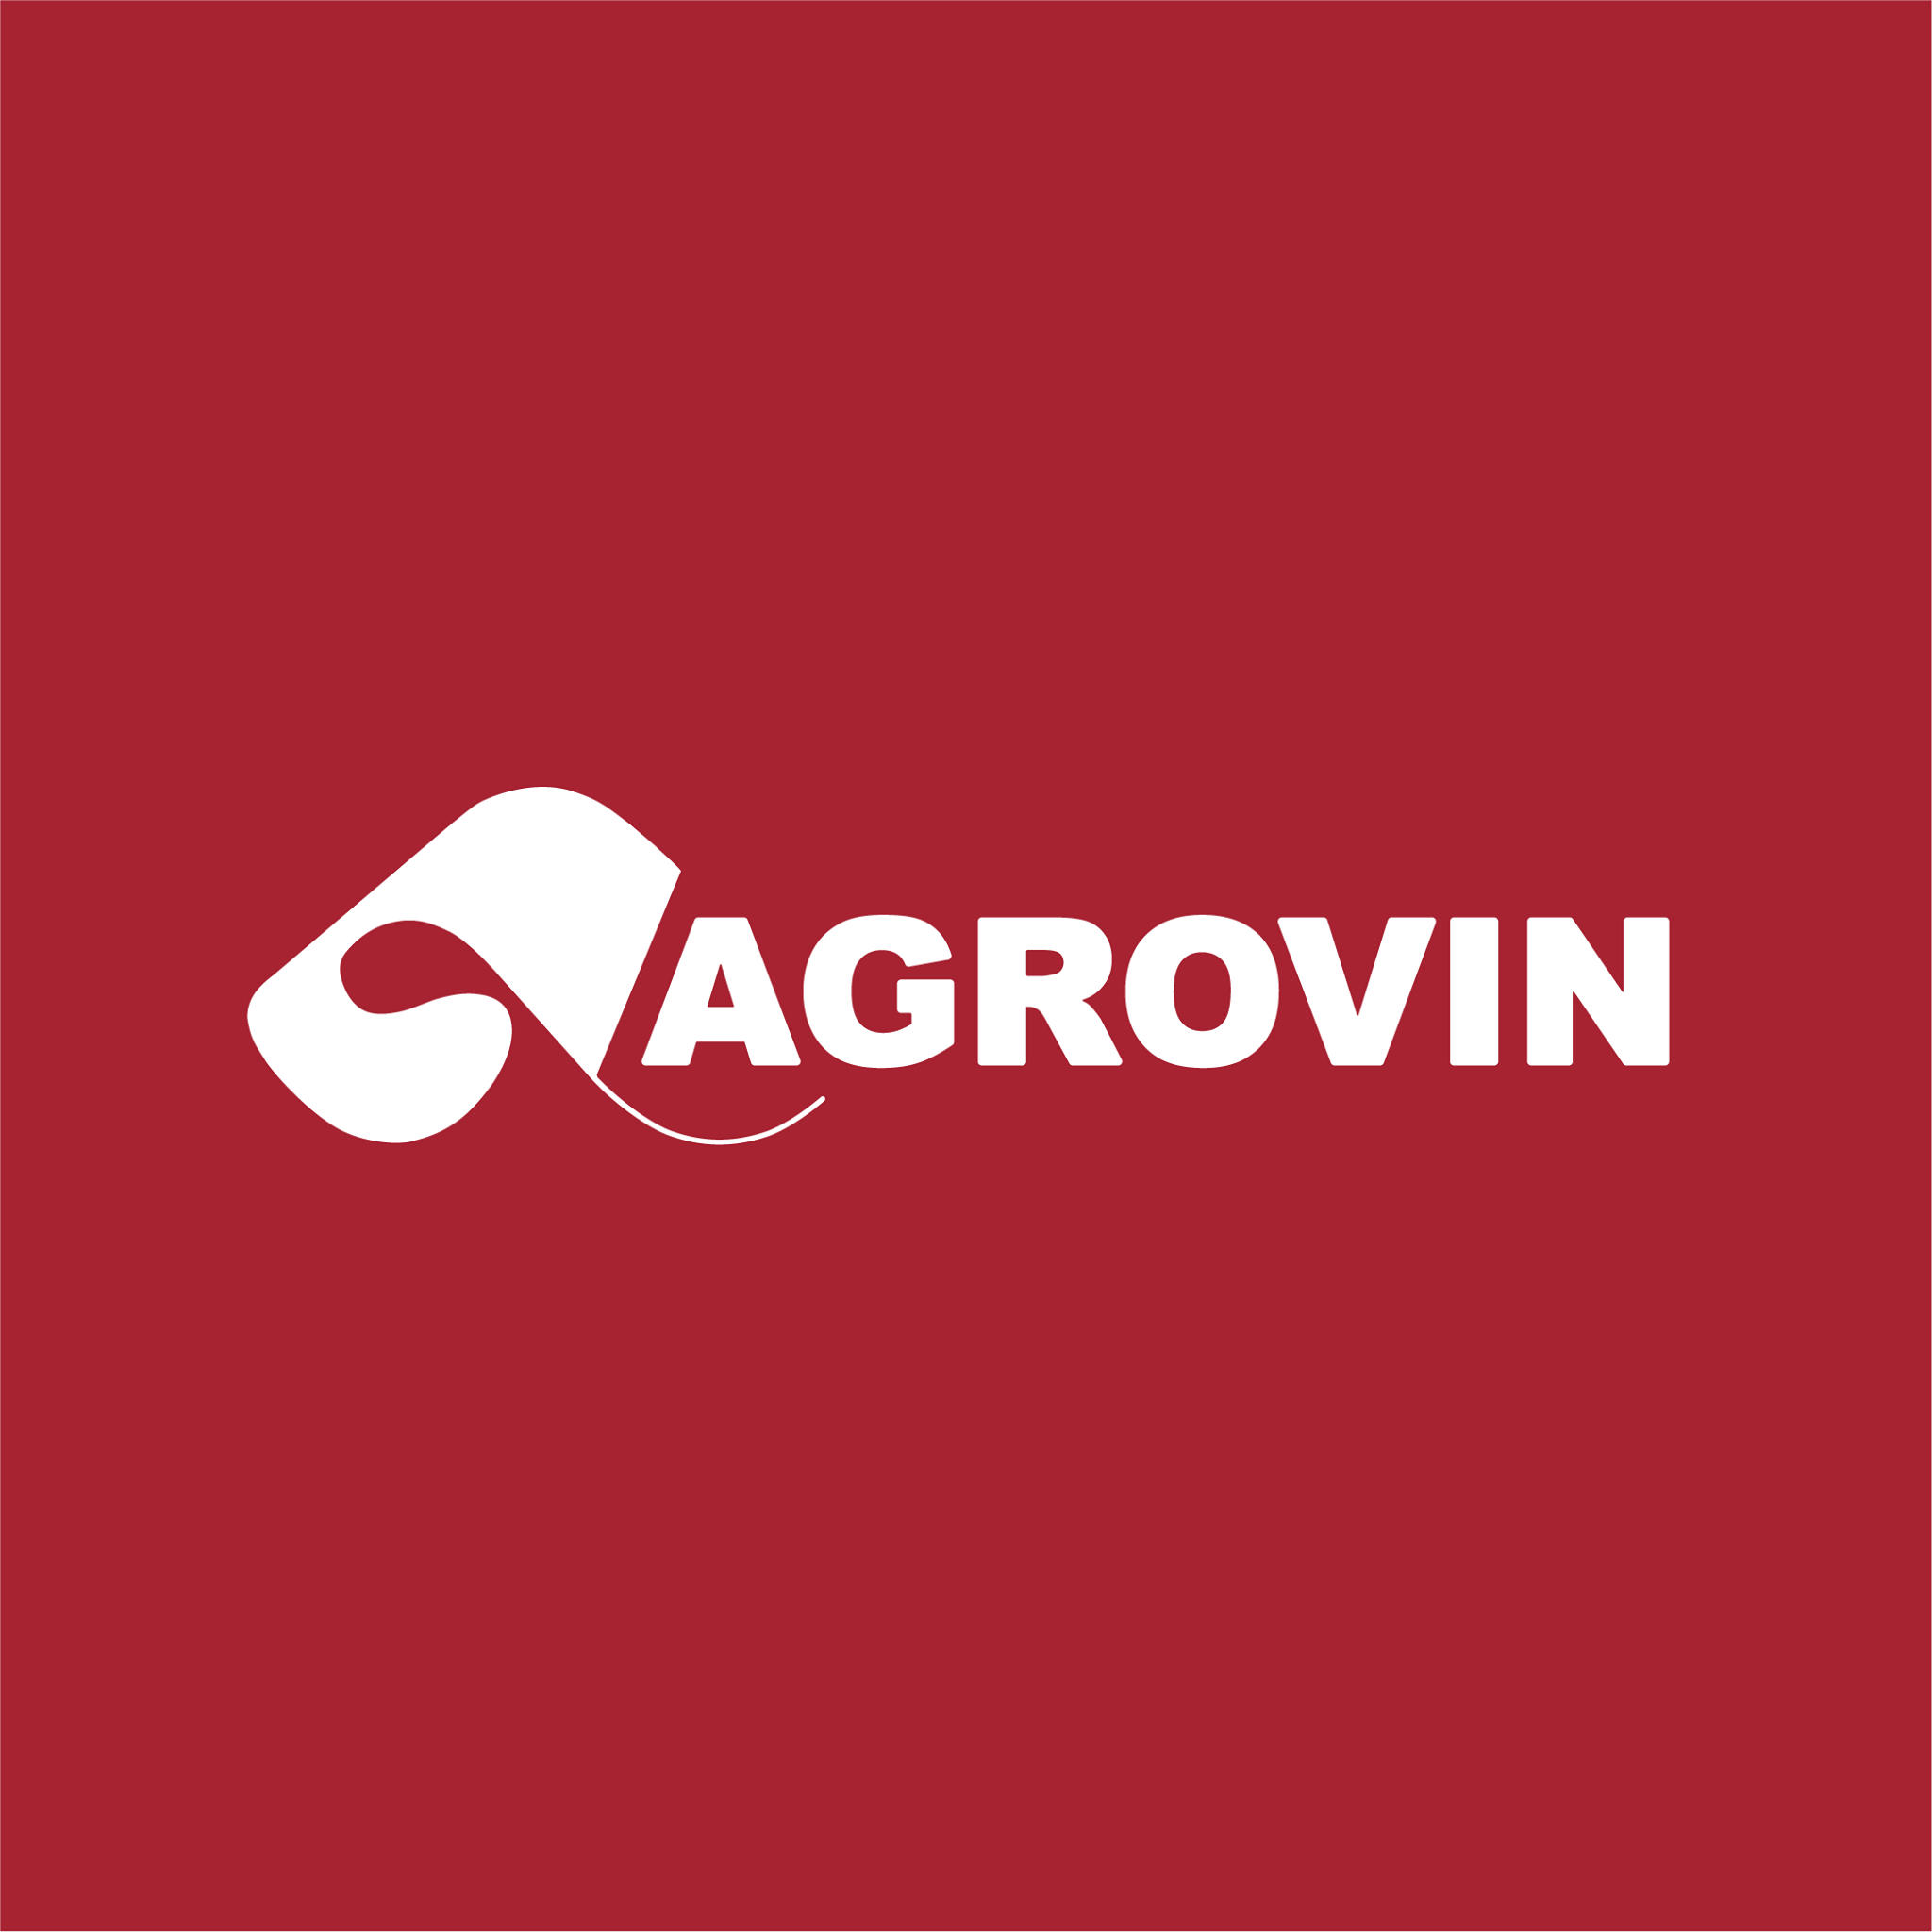 Agrovin logo